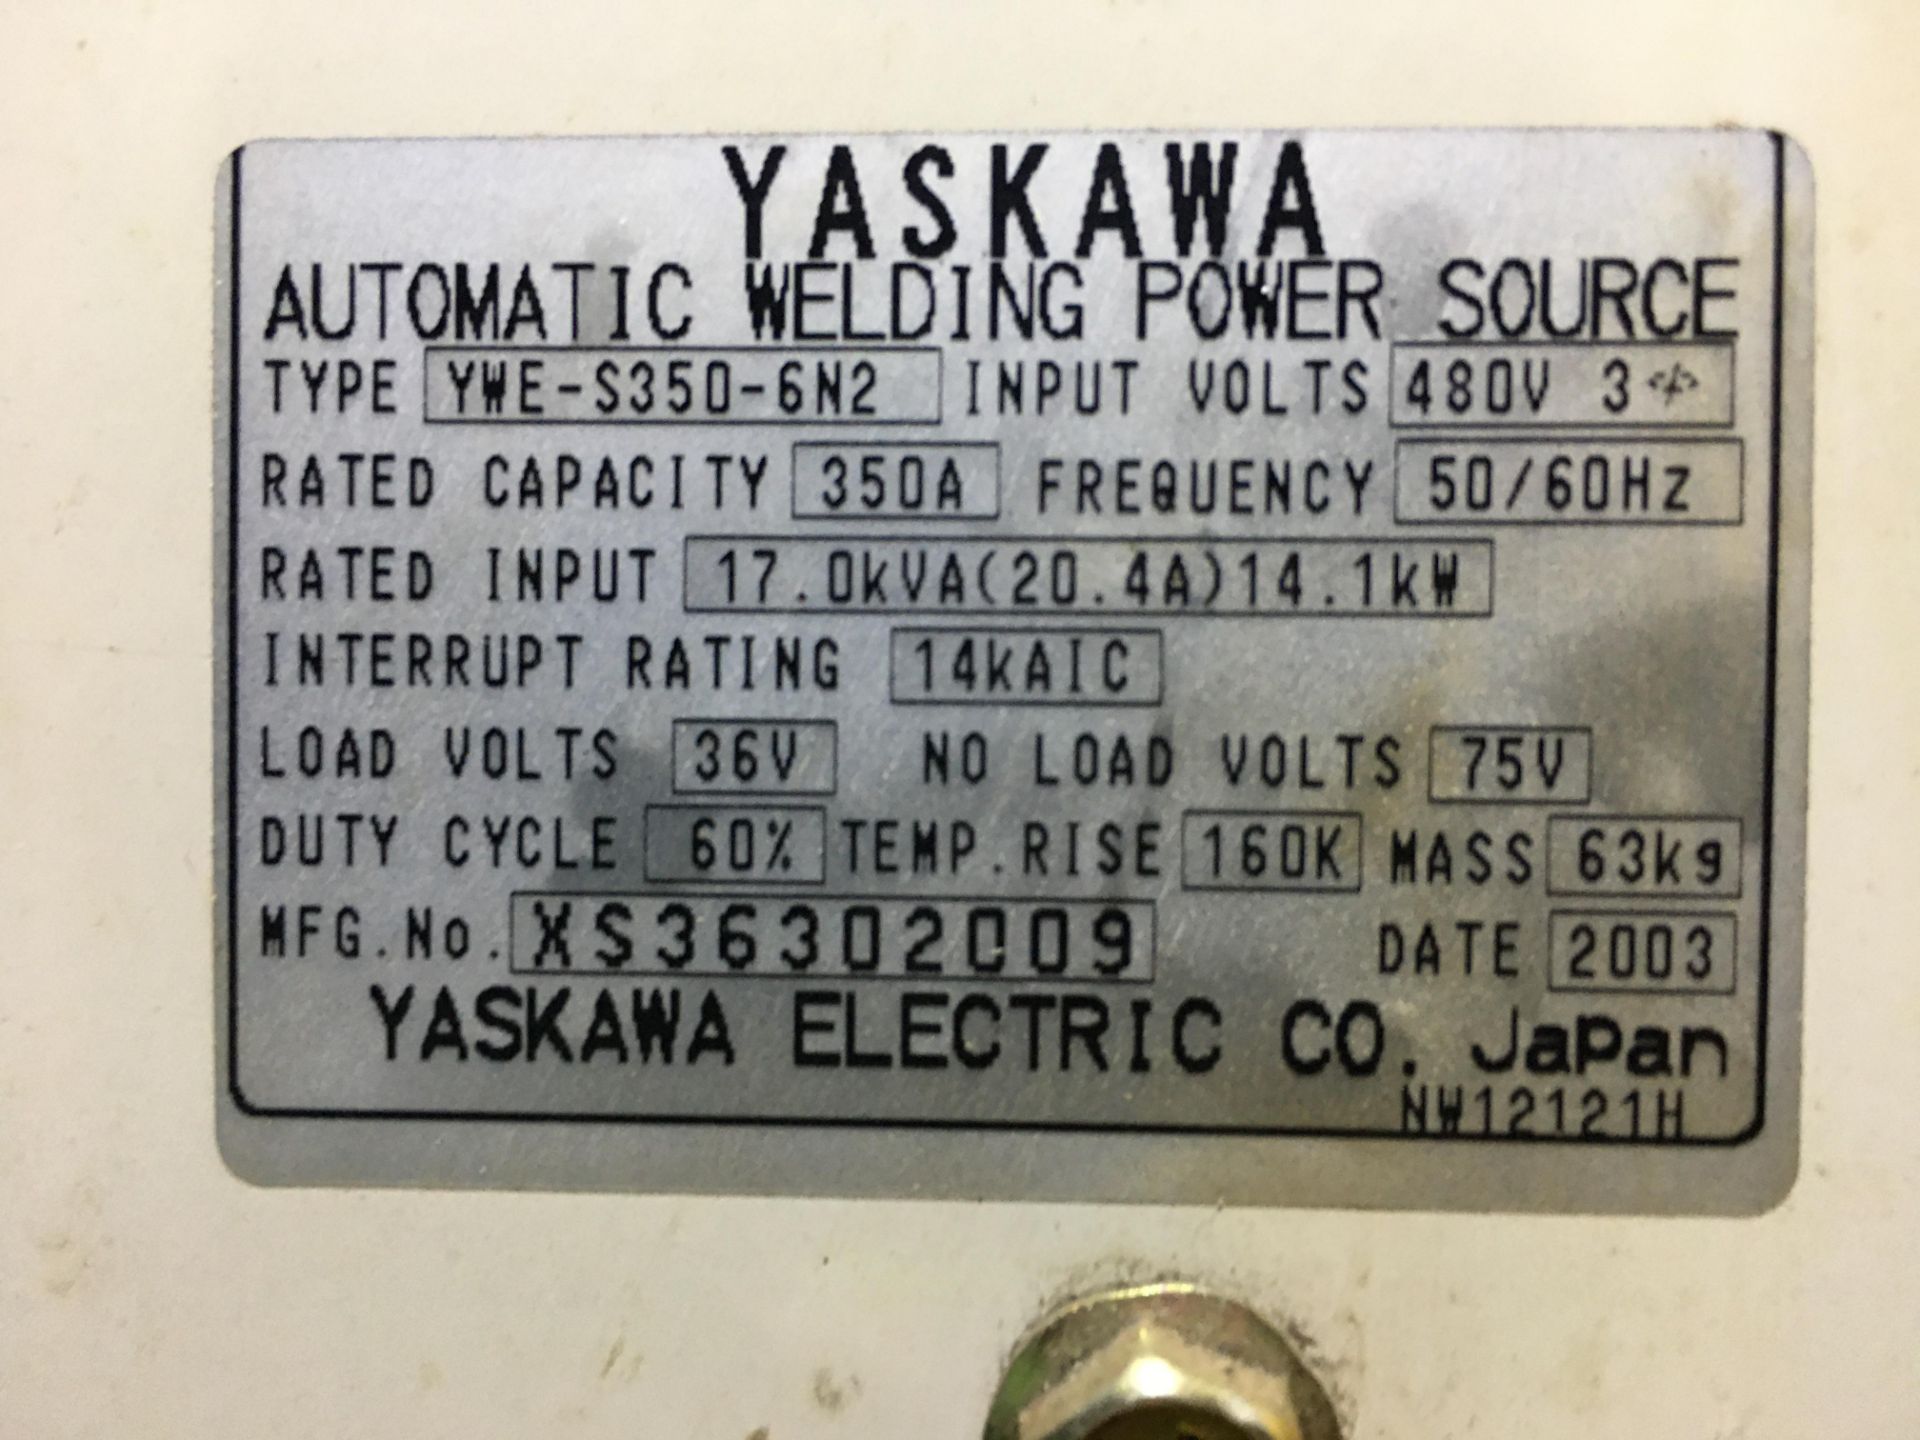 Yaskawa Automatic Welding Power Source - Image 3 of 3